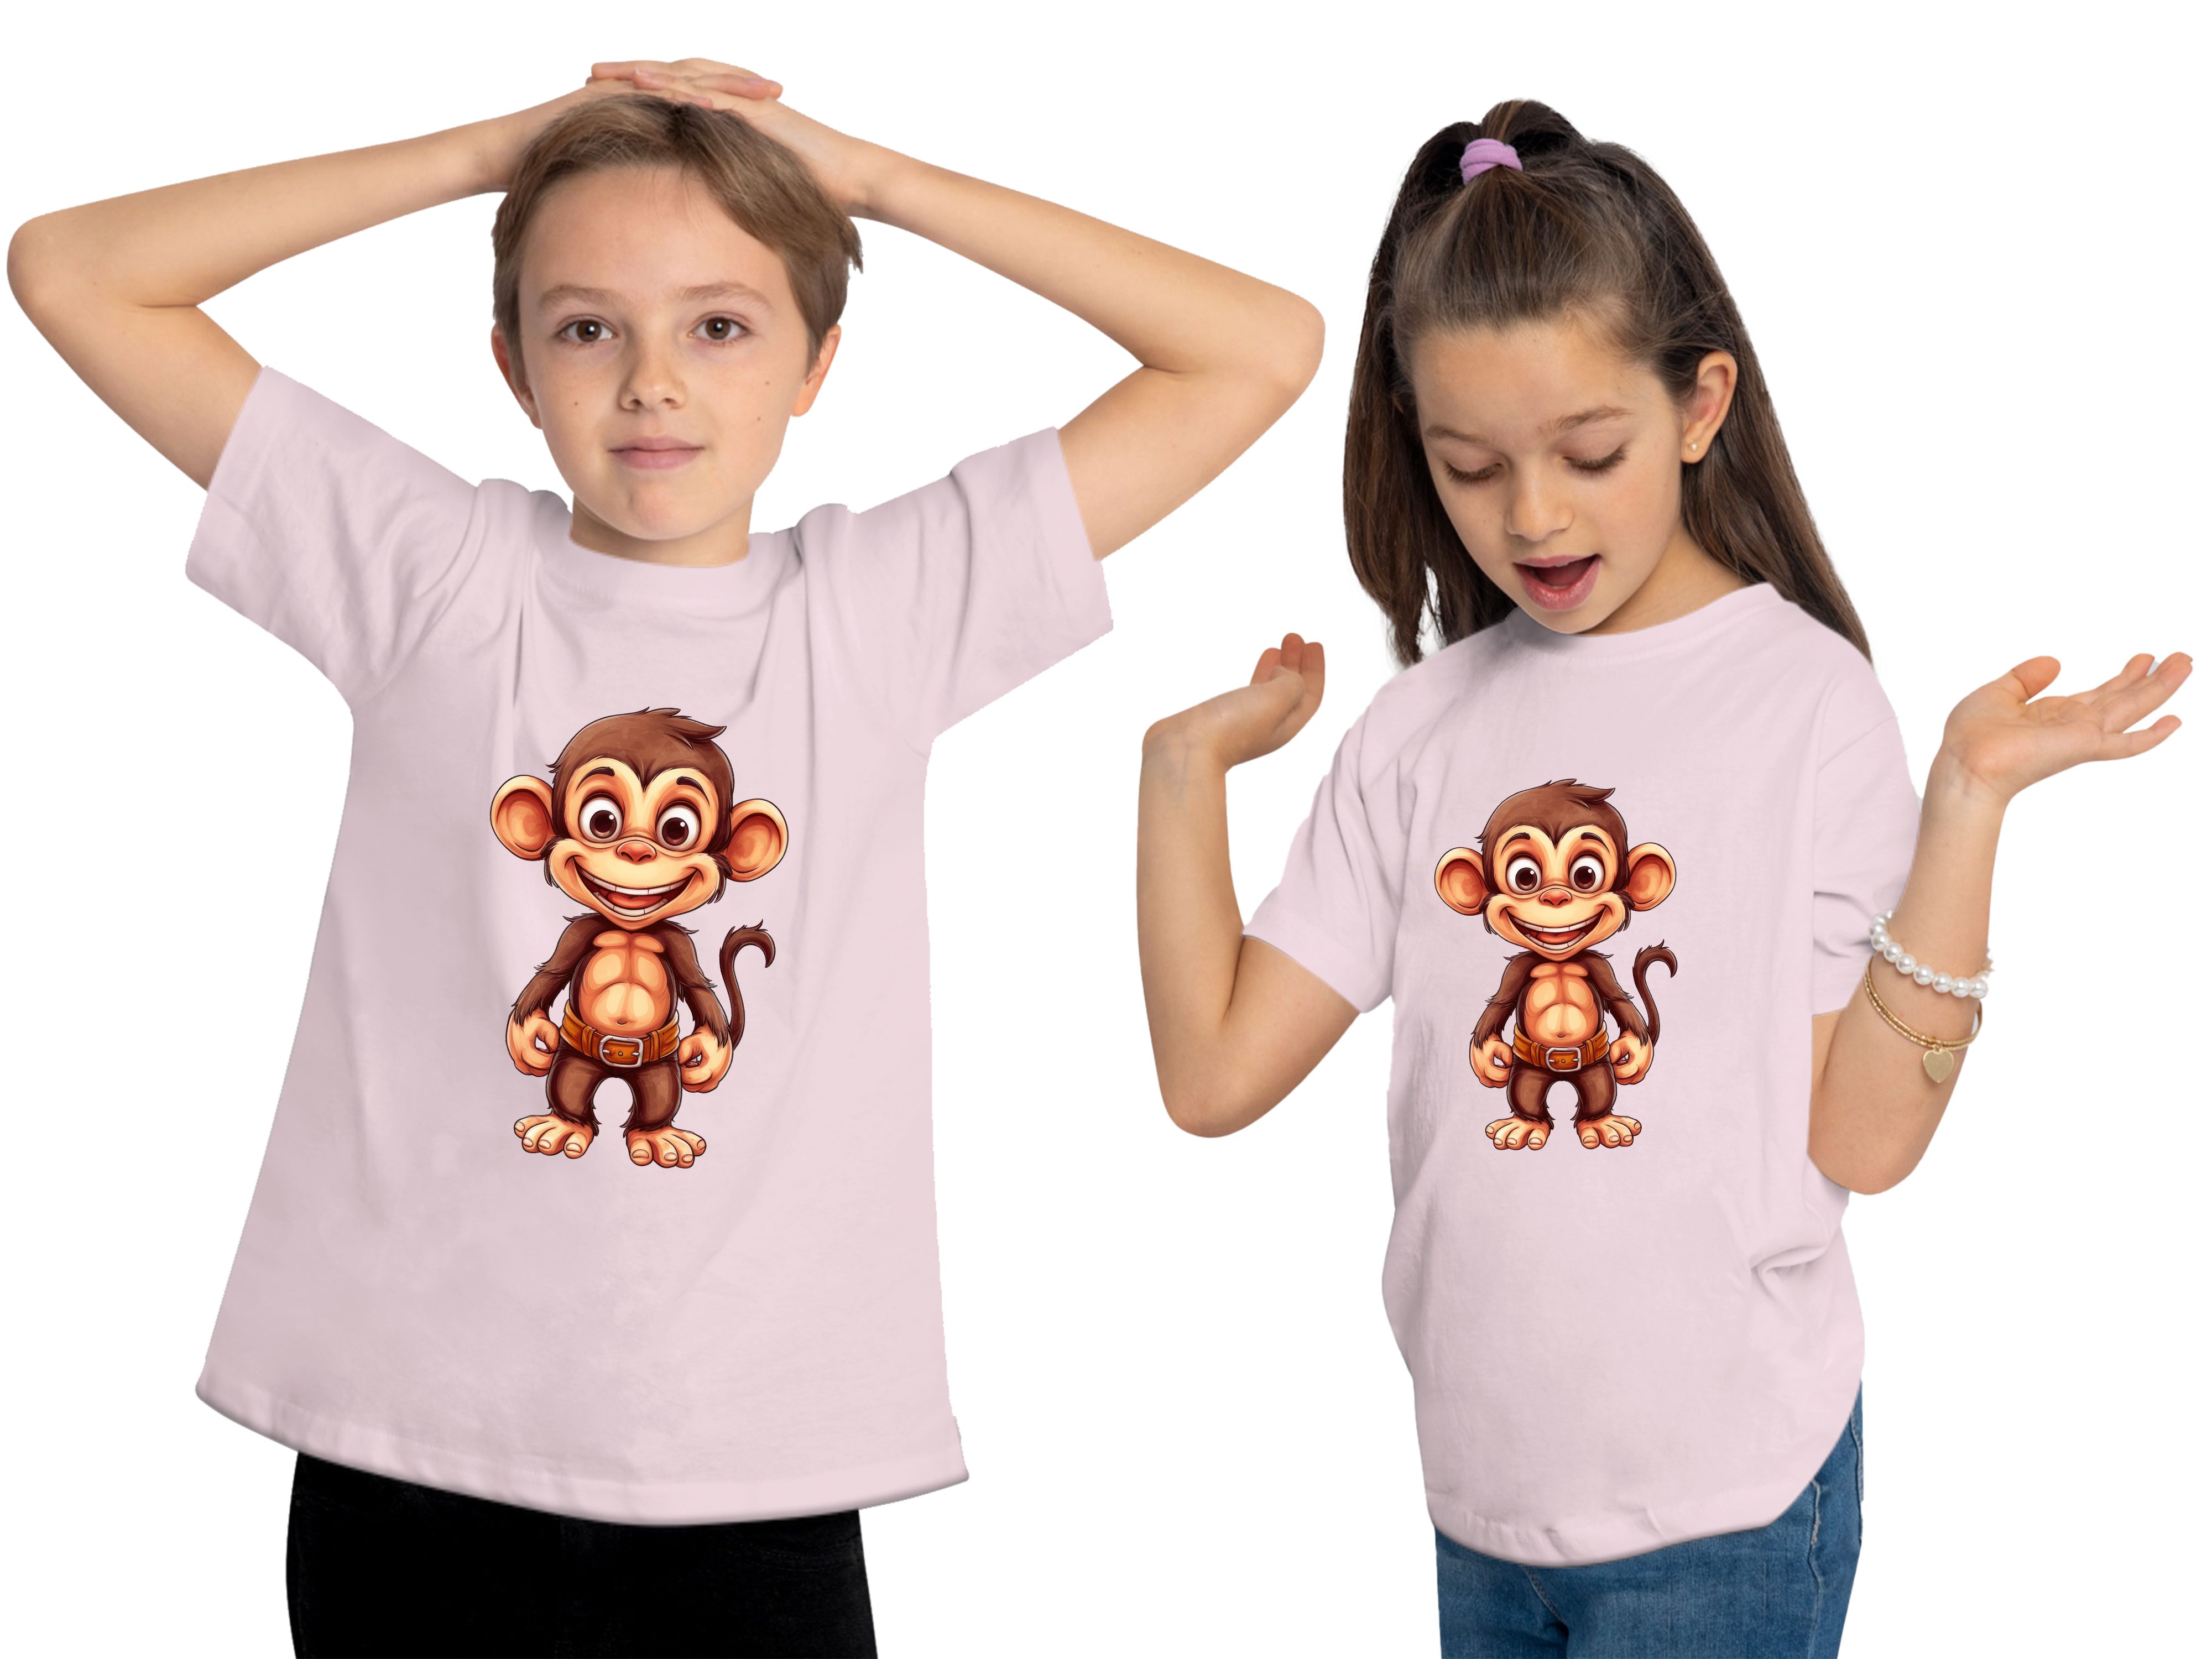 Kinder Baby Baumwollshirt i276 rosa bedruckt MyDesign24 Affe T-Shirt mit Schimpanse Wildtier Print - Aufdruck, Shirt